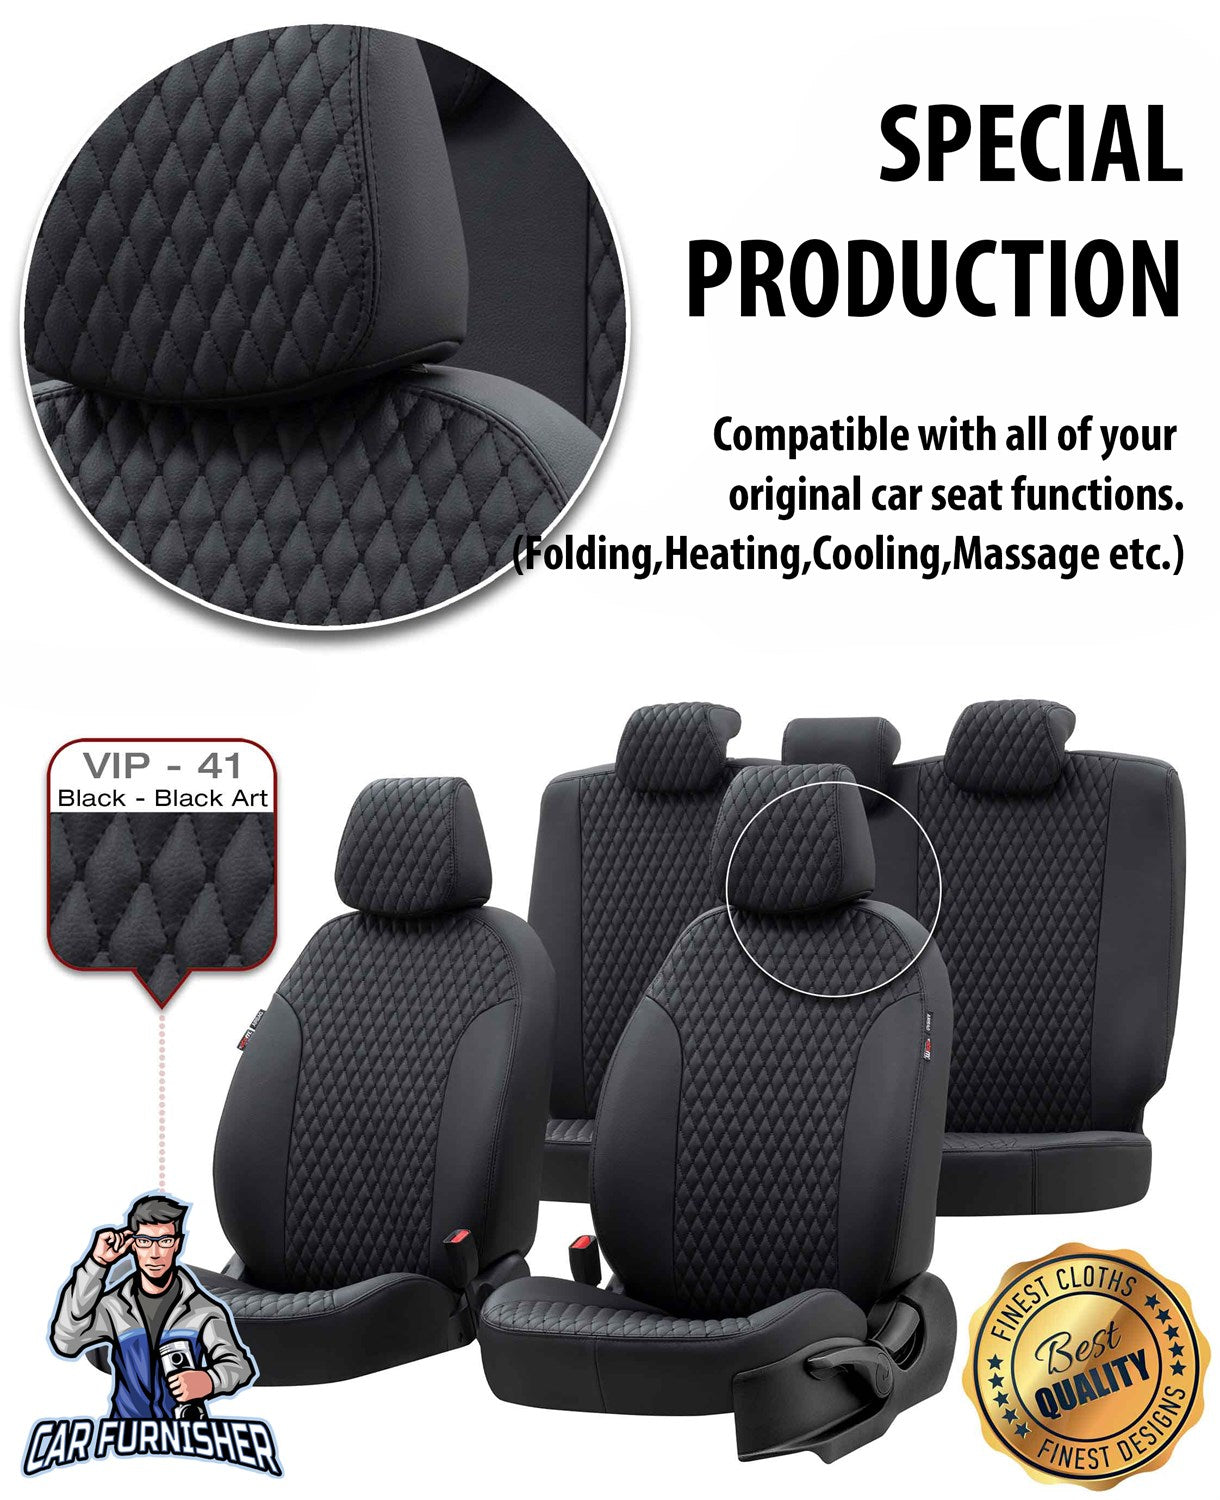 Seat Cordoba Seat Covers Amsterdam Leather Design Smoked Black Leather